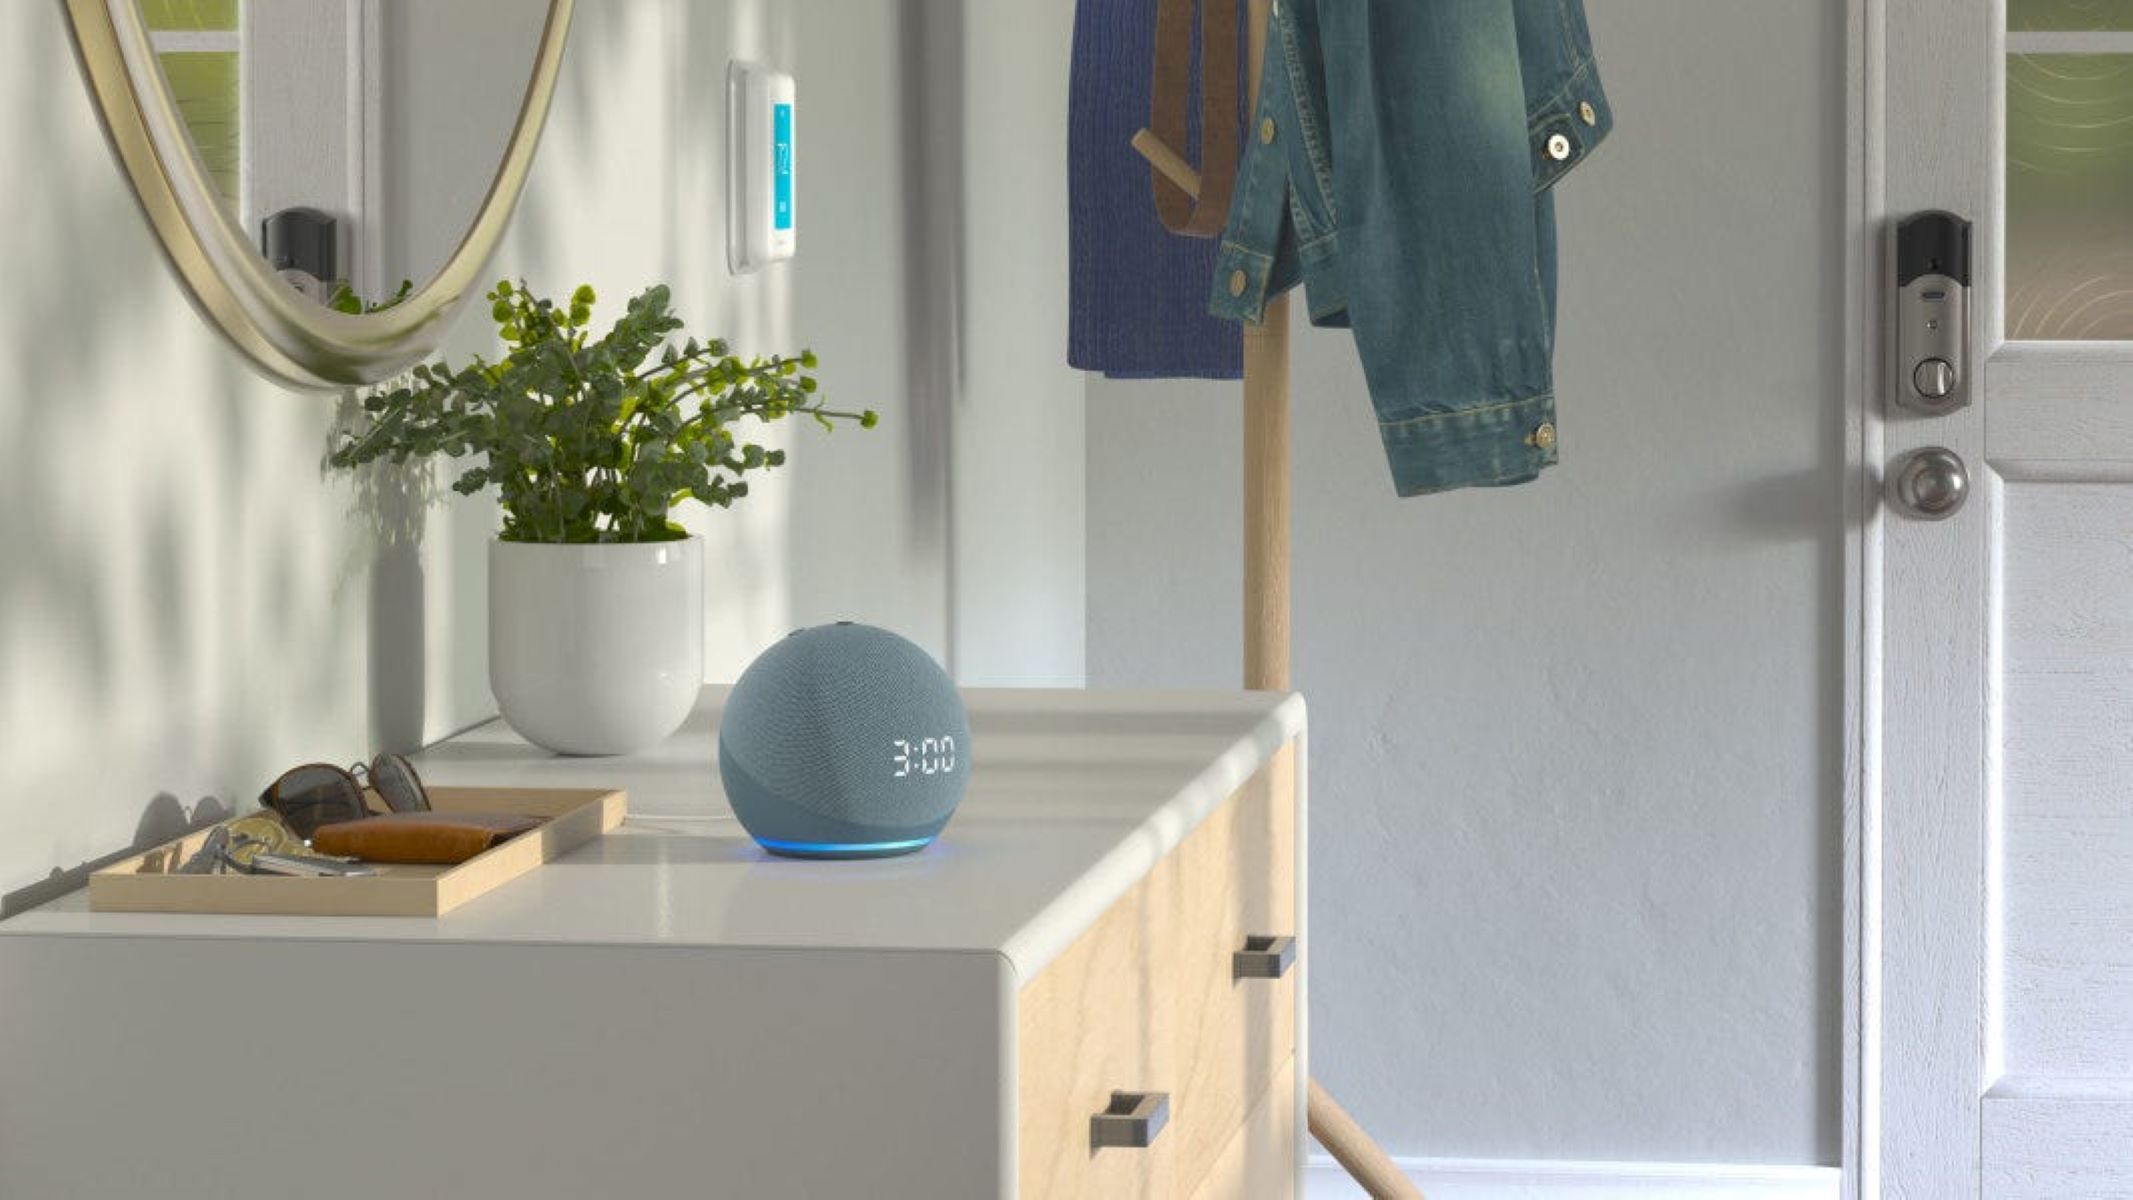 How To Make A Smart Home With Alexa